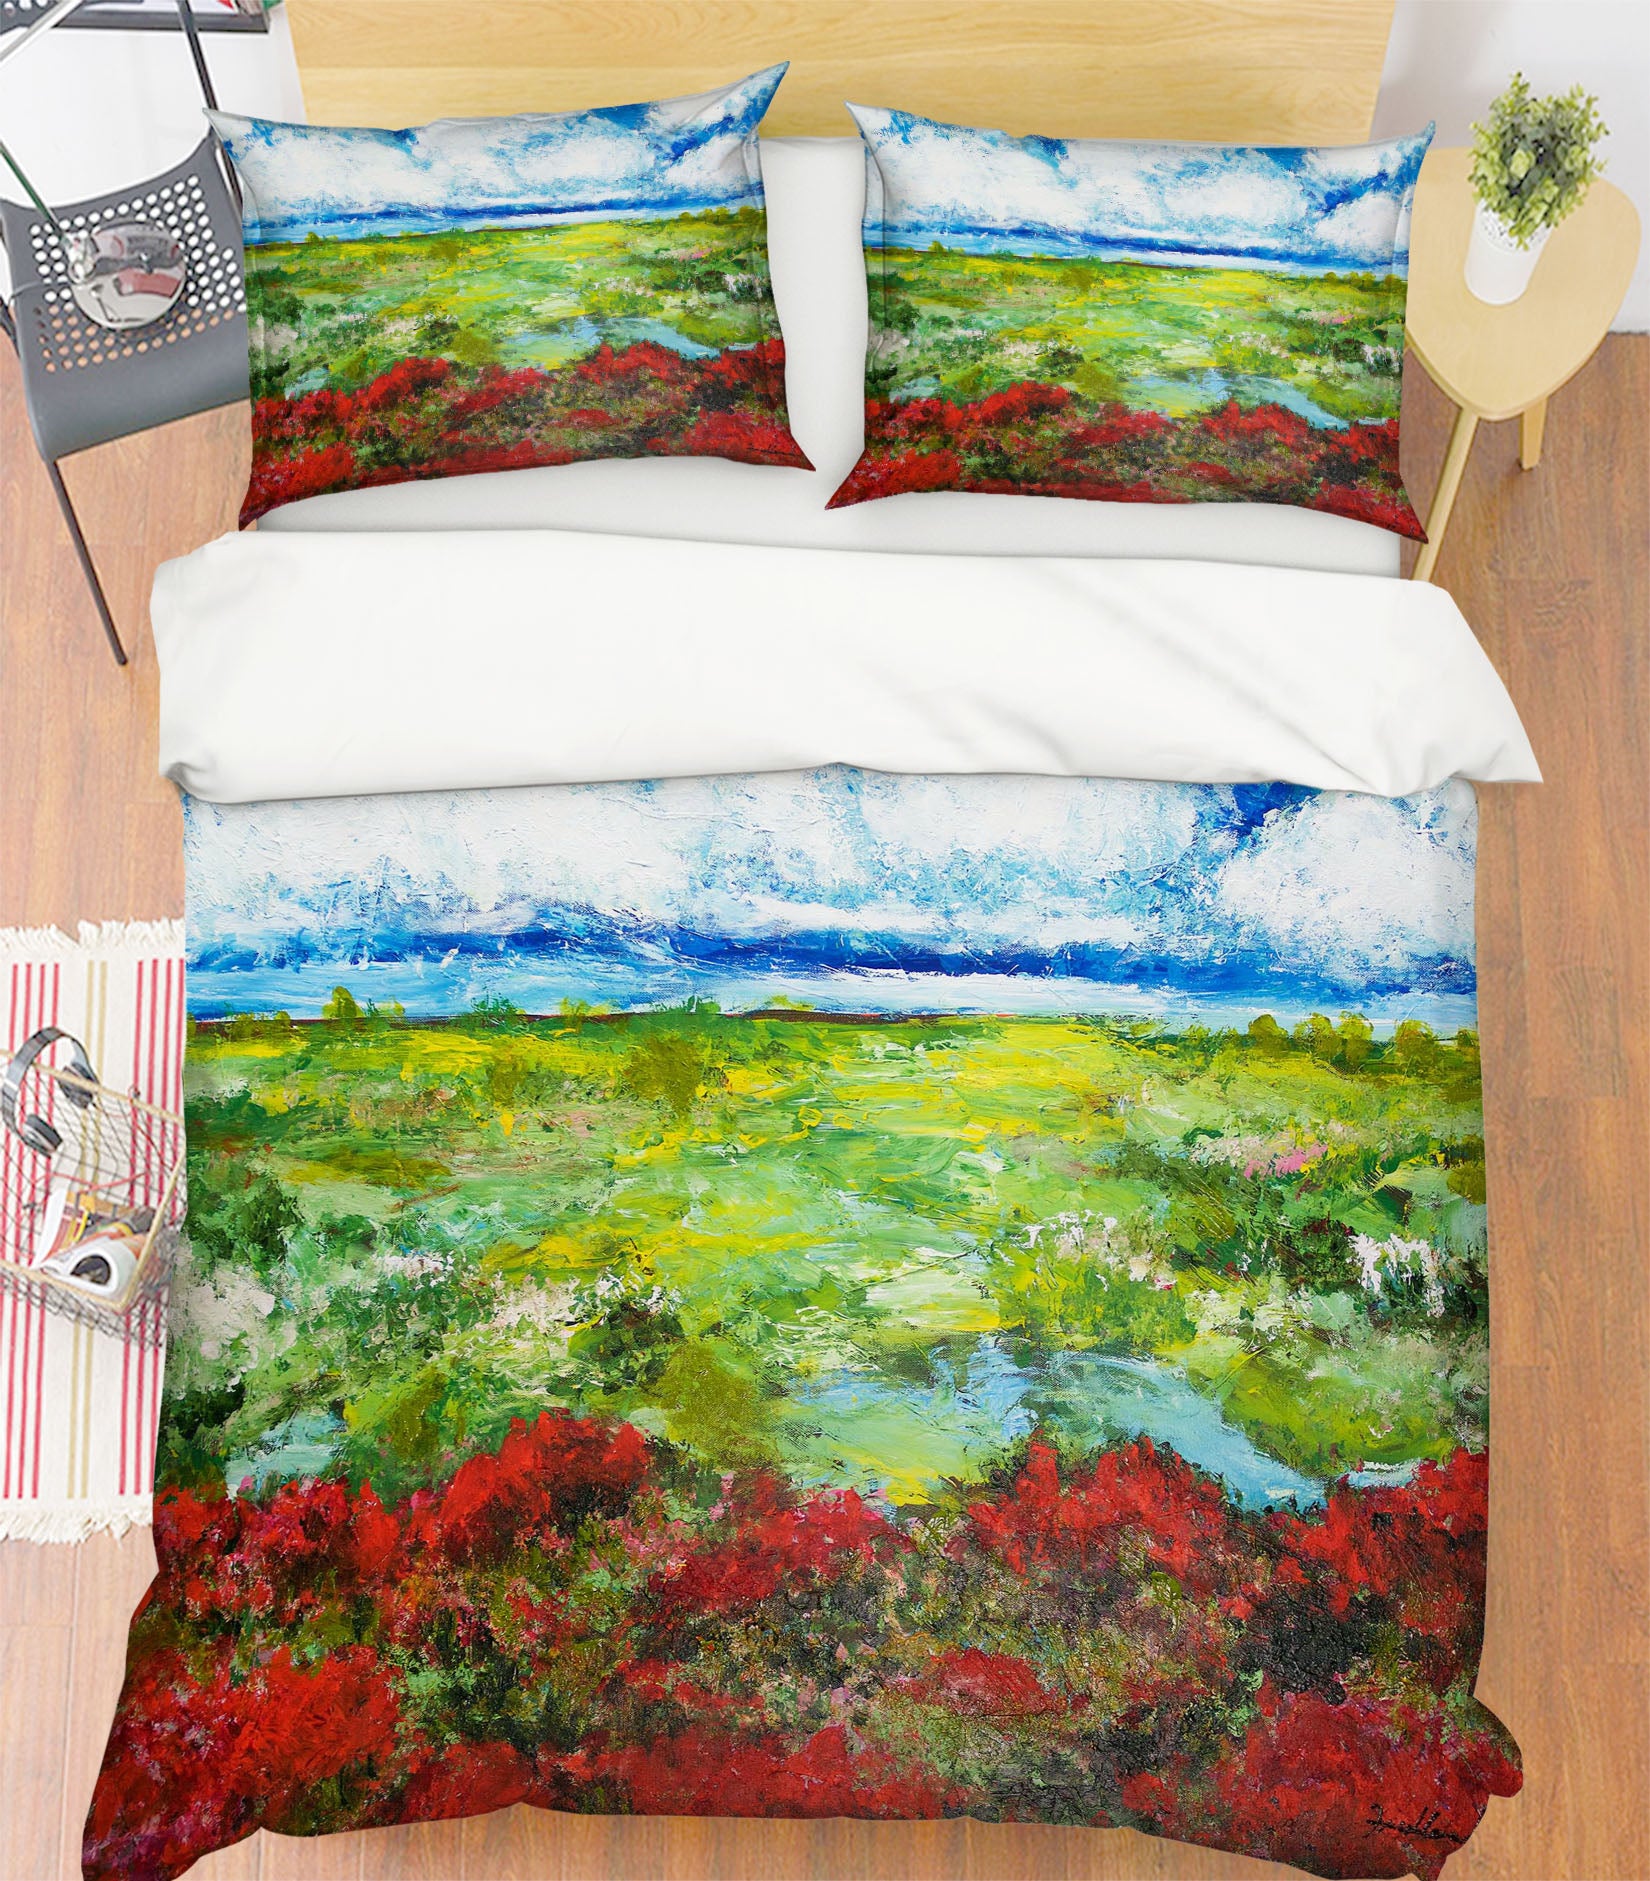 3D Red Berries 1131 Allan P. Friedlander Bedding Bed Pillowcases Quilt